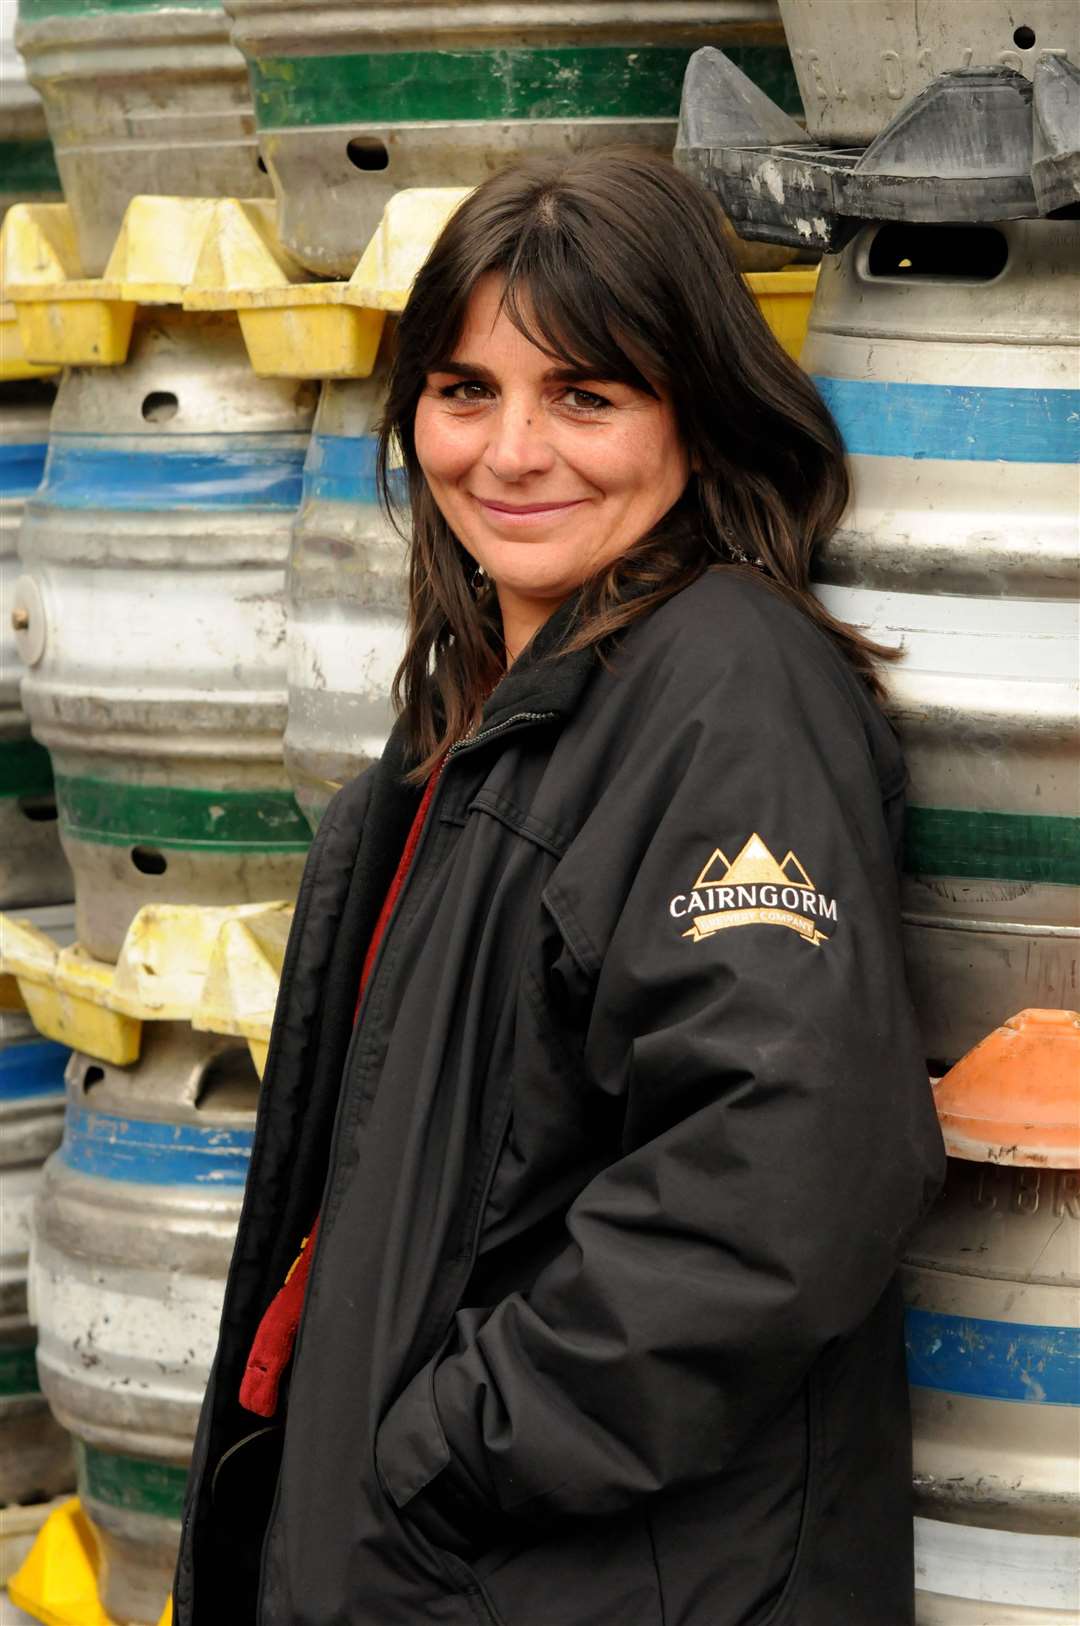 Sam Faircliff runs the Aviemore-based Cairgorm Brewery.